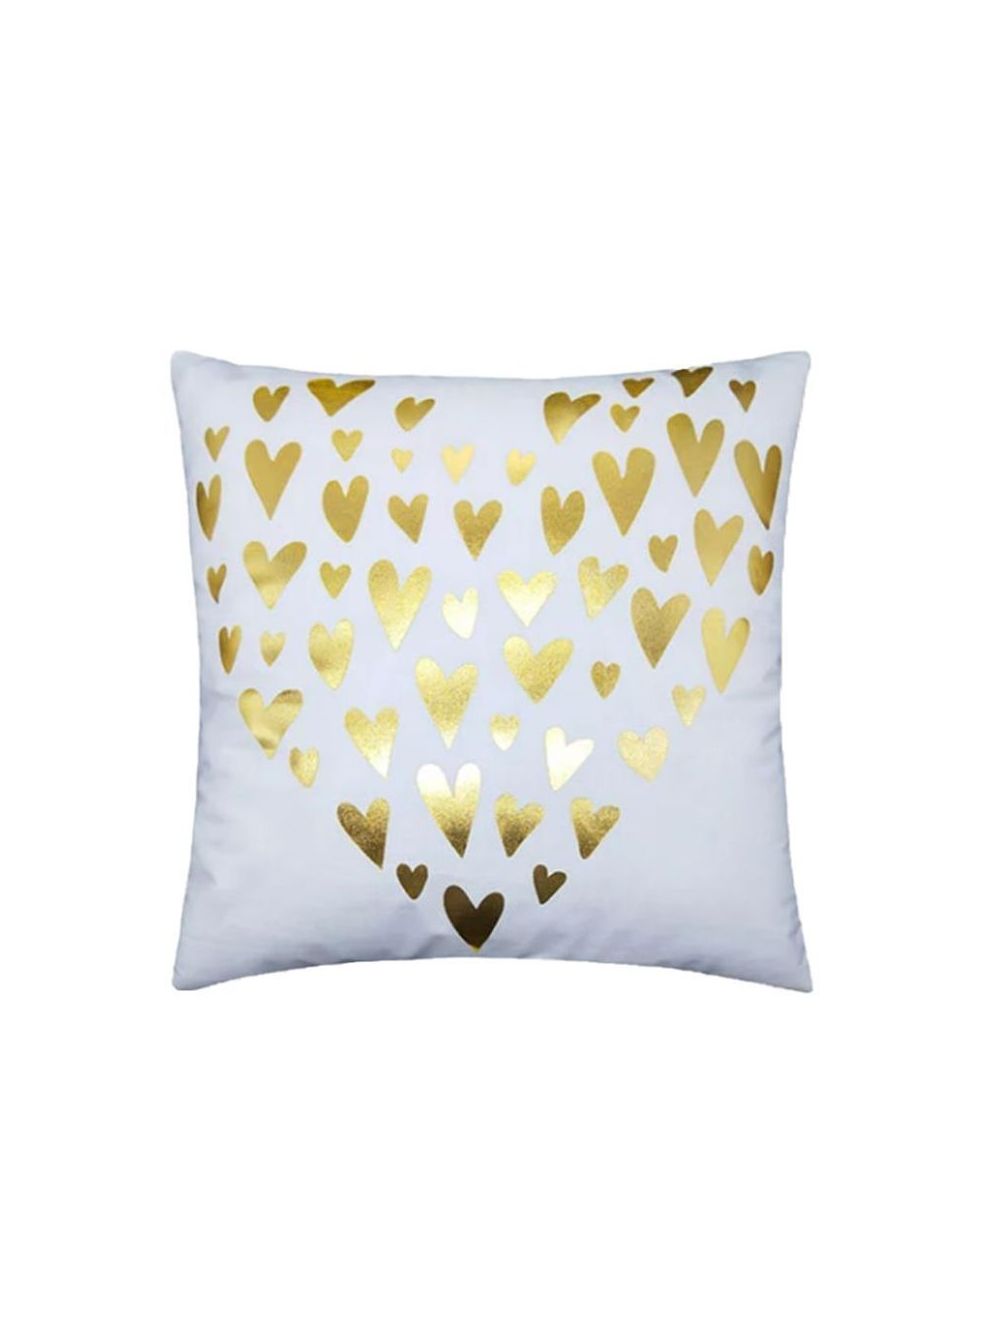 Rishahome Golden Heart Metallic Printed Cushion Cover 45x45 cm-9C72I0004